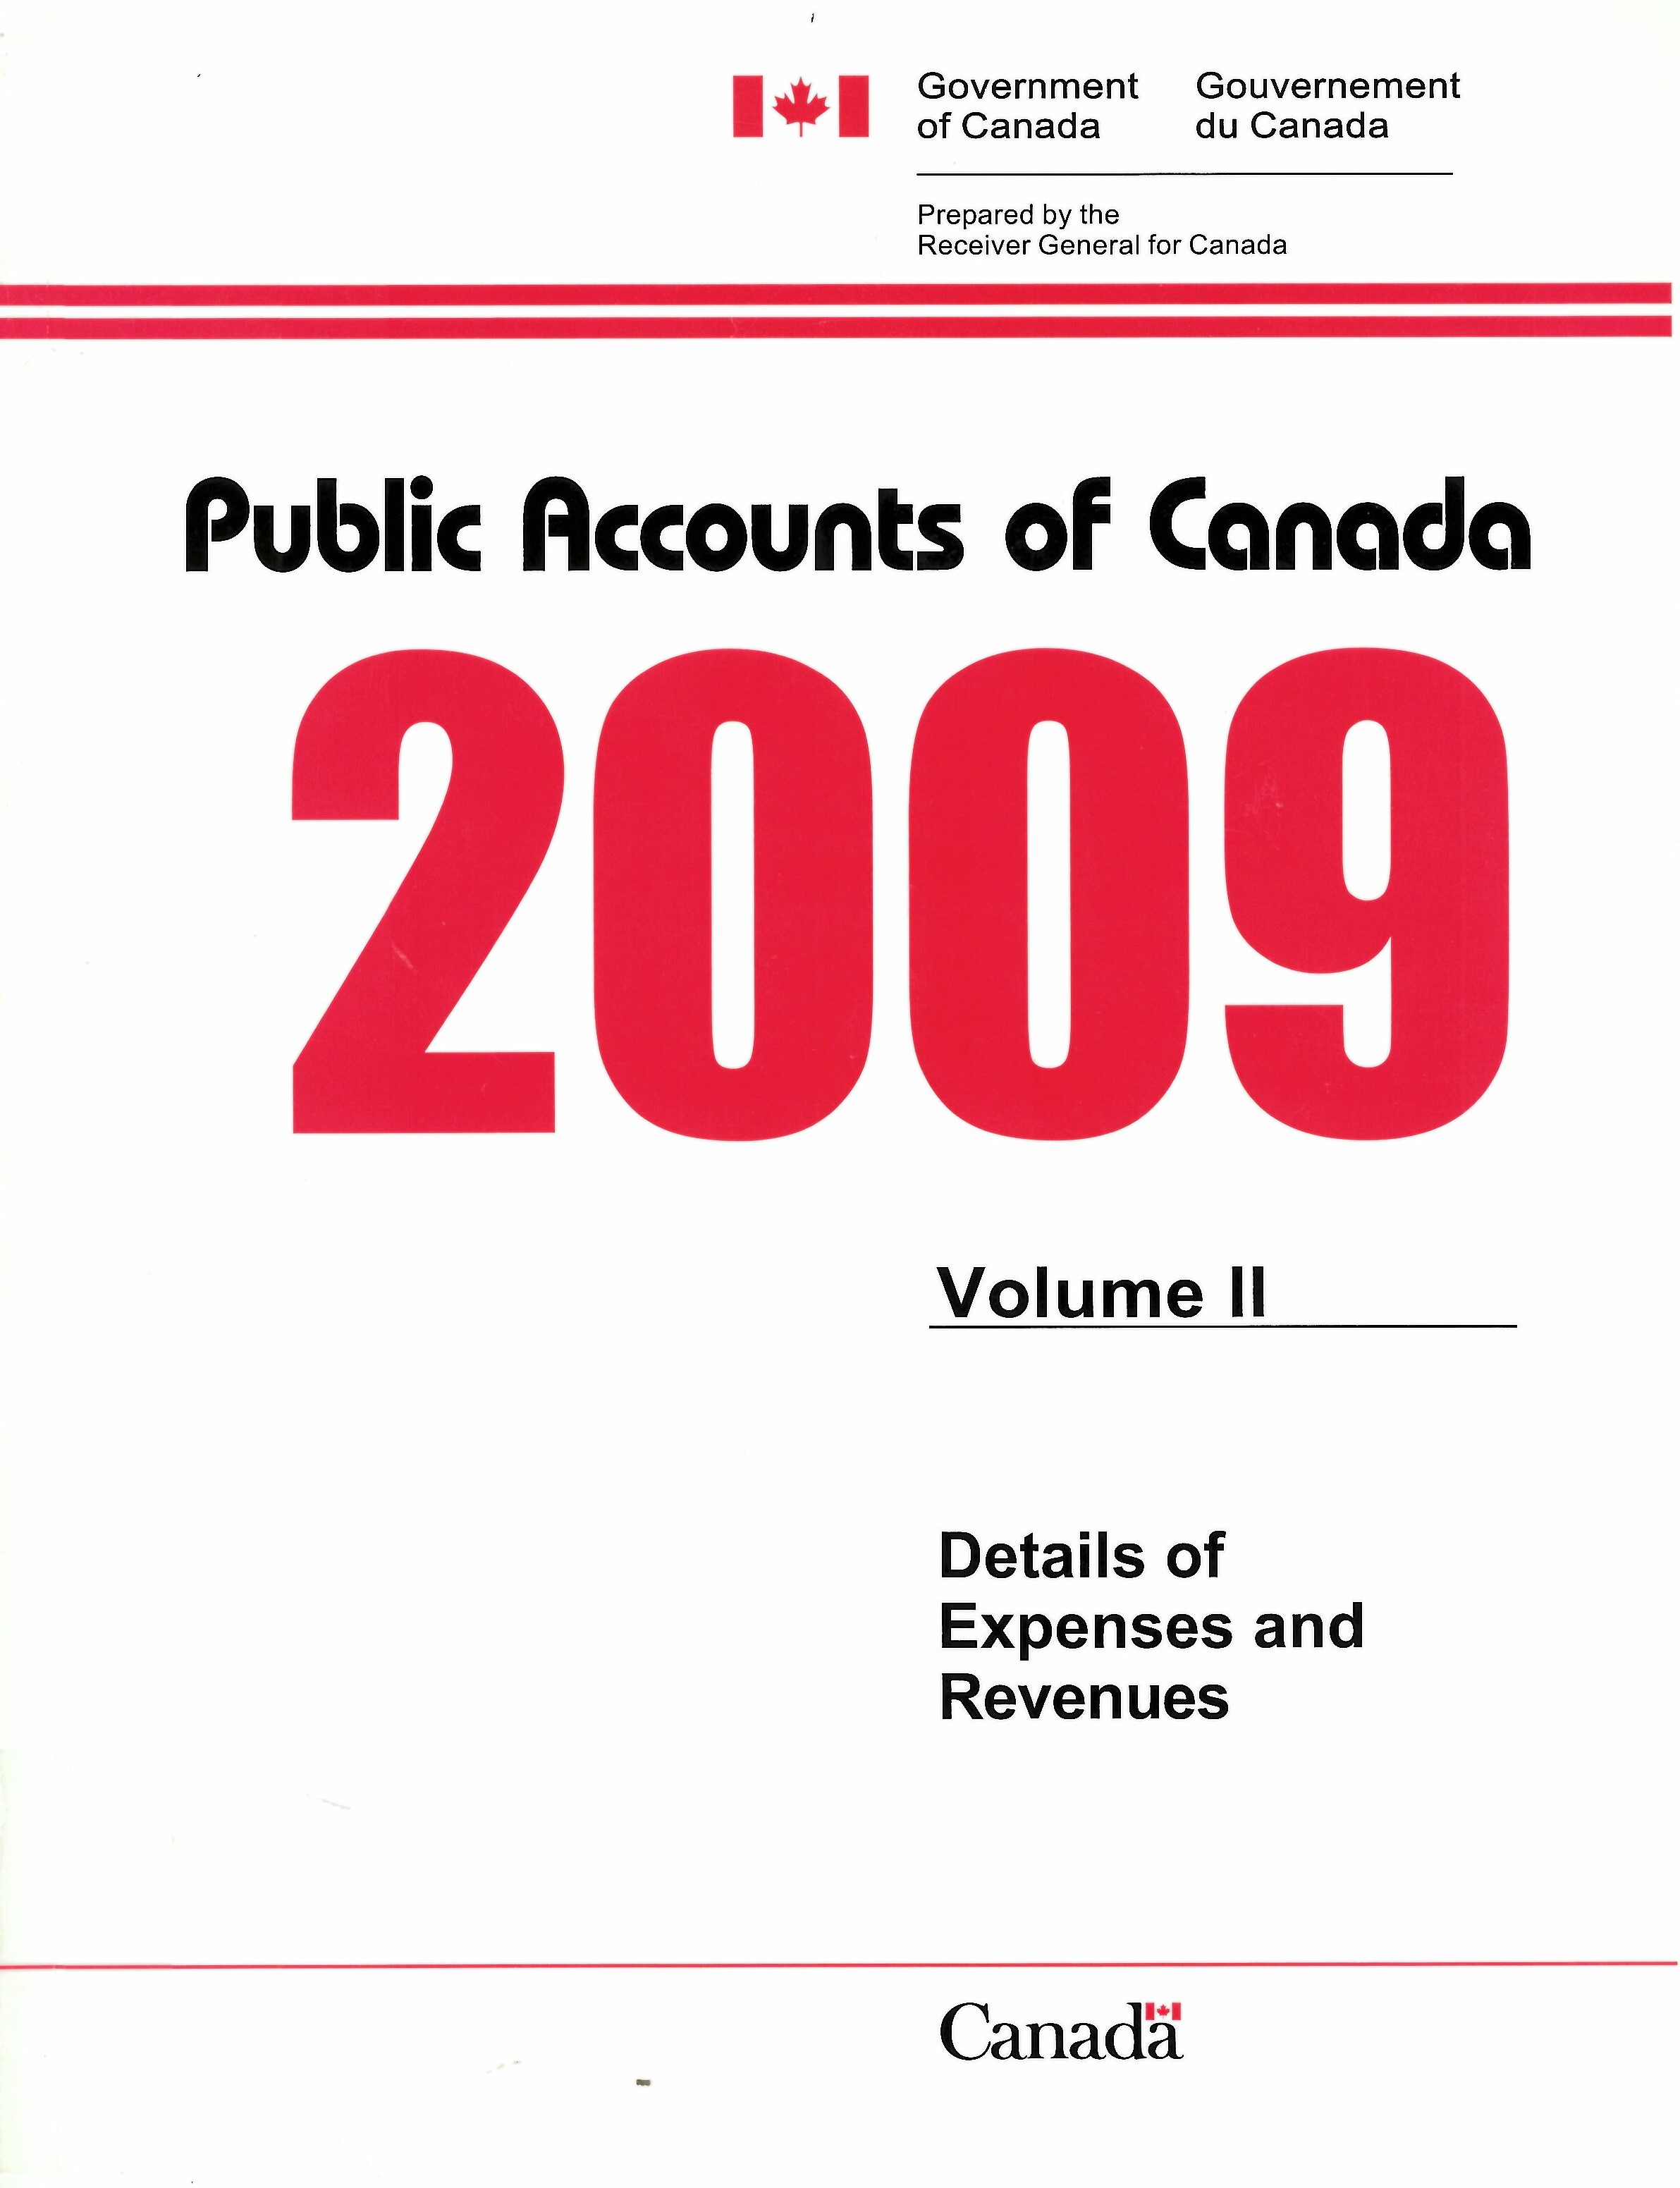 Public accounts of Canada